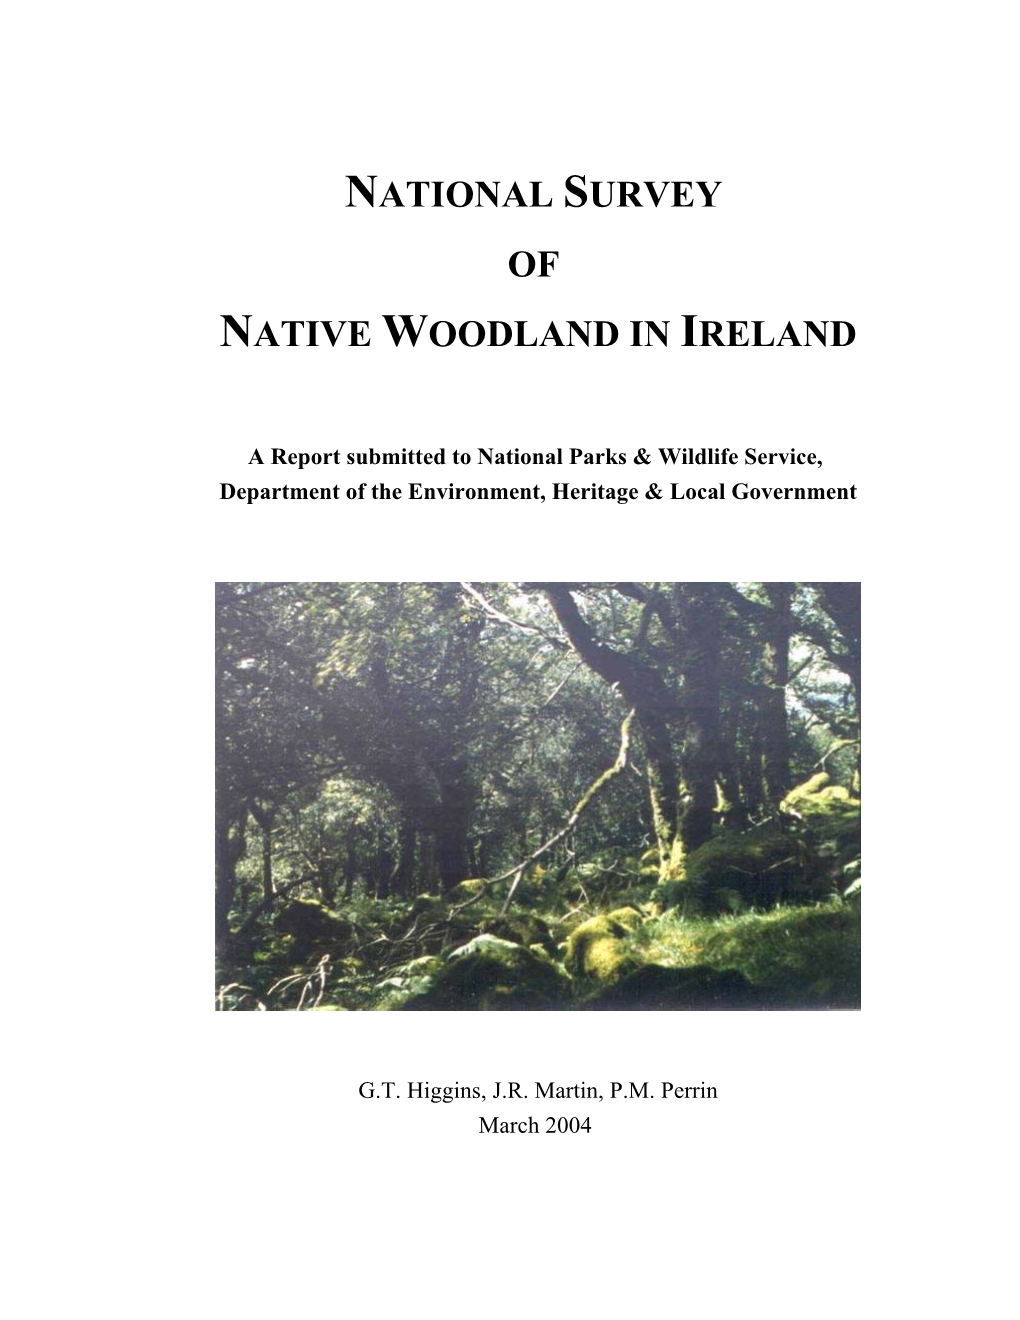 Native Woodland in Ireland